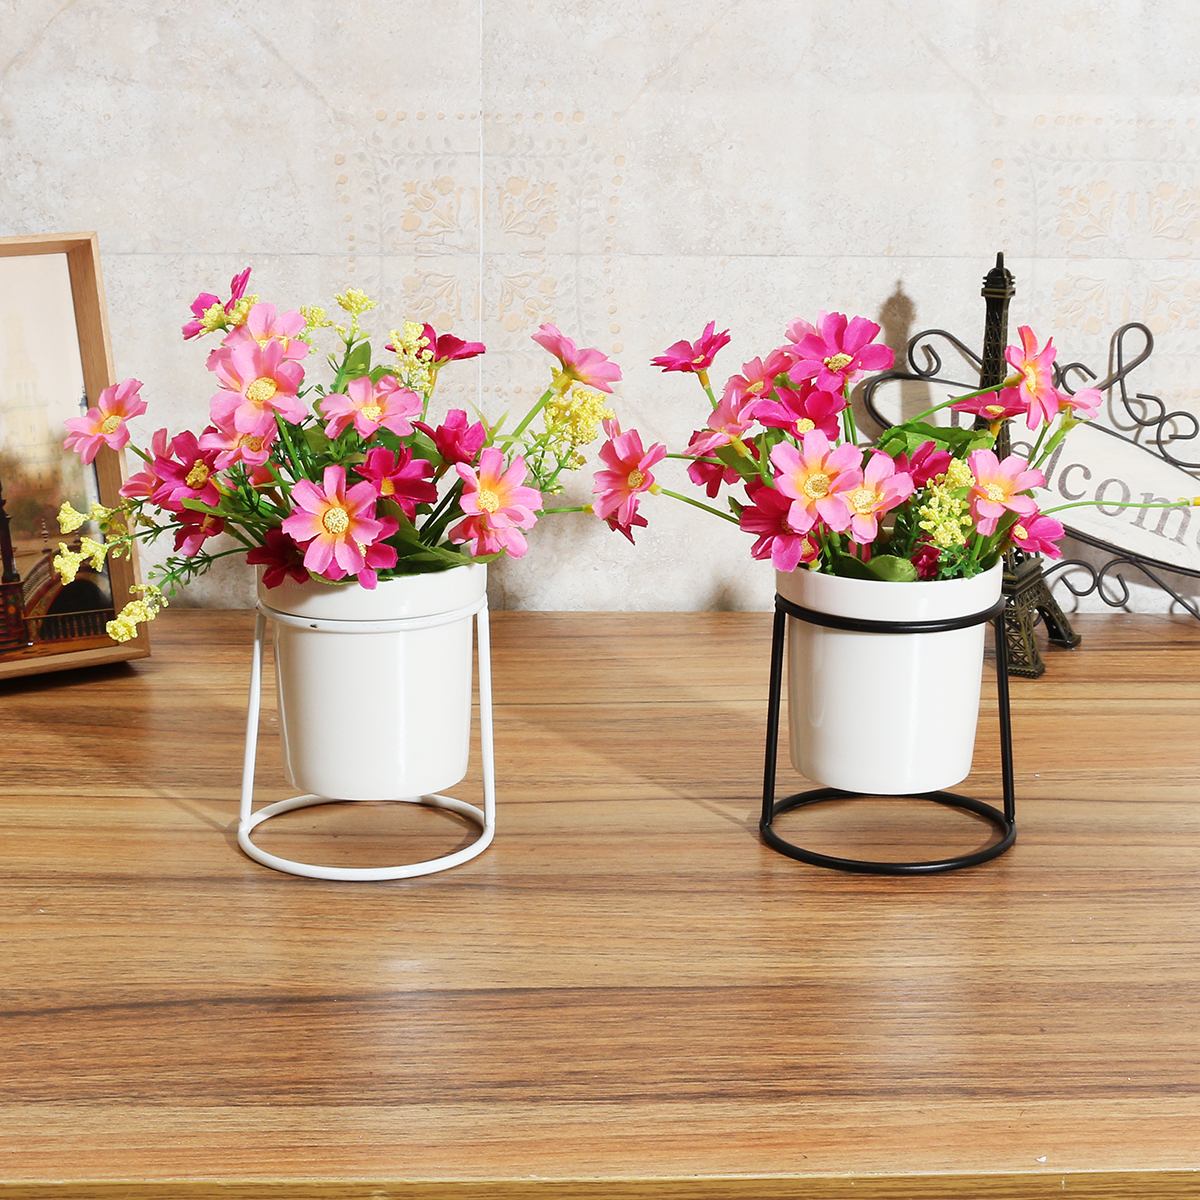 Home-Gardening-Ceramic-Flower-Pot-Metal-Rack-Garden-Plant-Succulent-Holder-Vase-Decorations-1640147-2